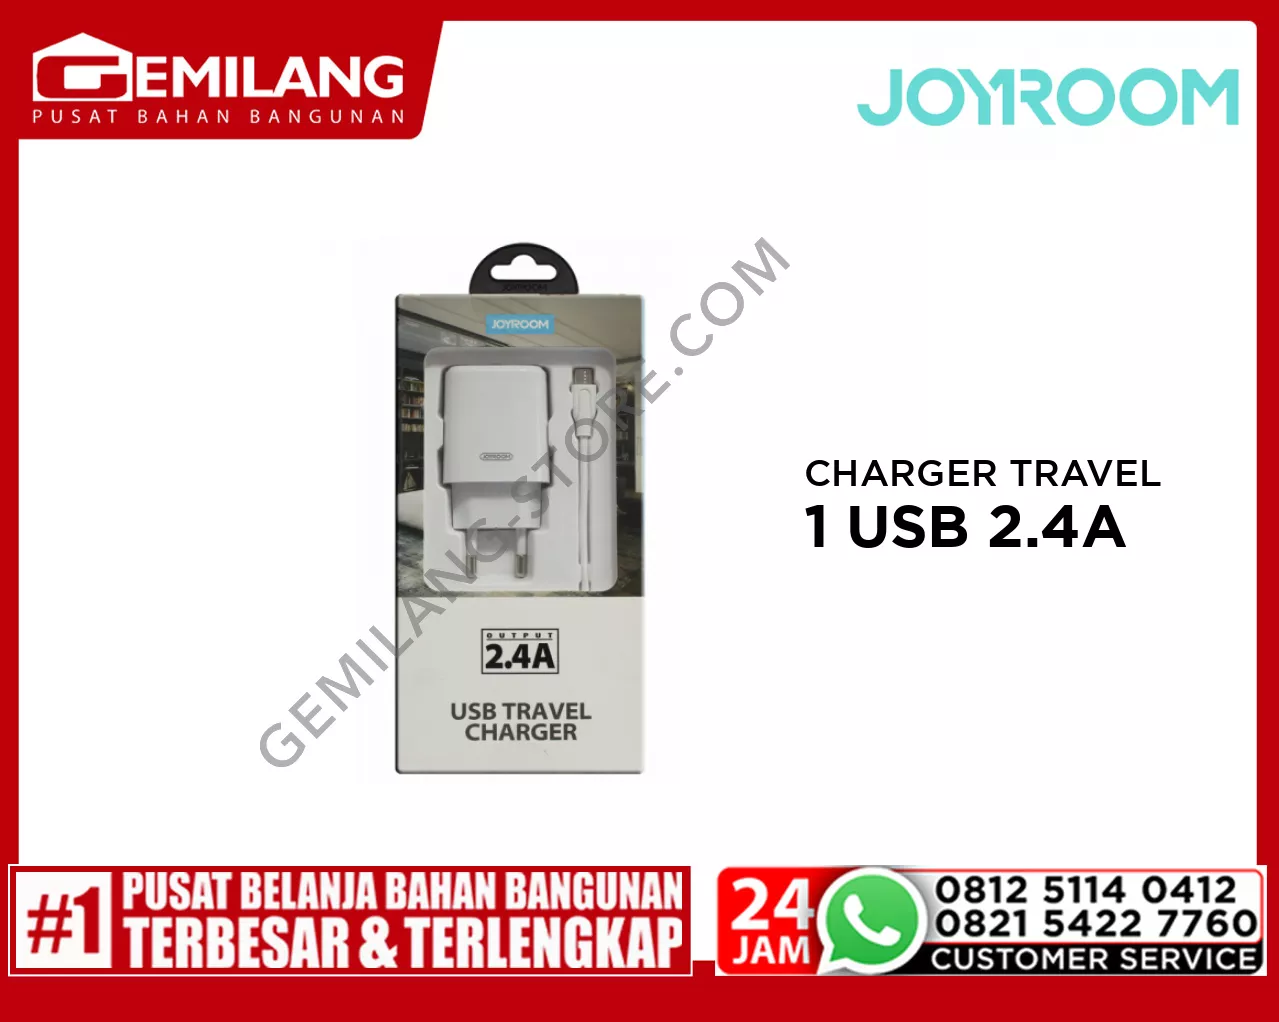 JOYROOM CHARGER TRAVEL 1 USB 2.4A L-M126 + KABEL MICRO